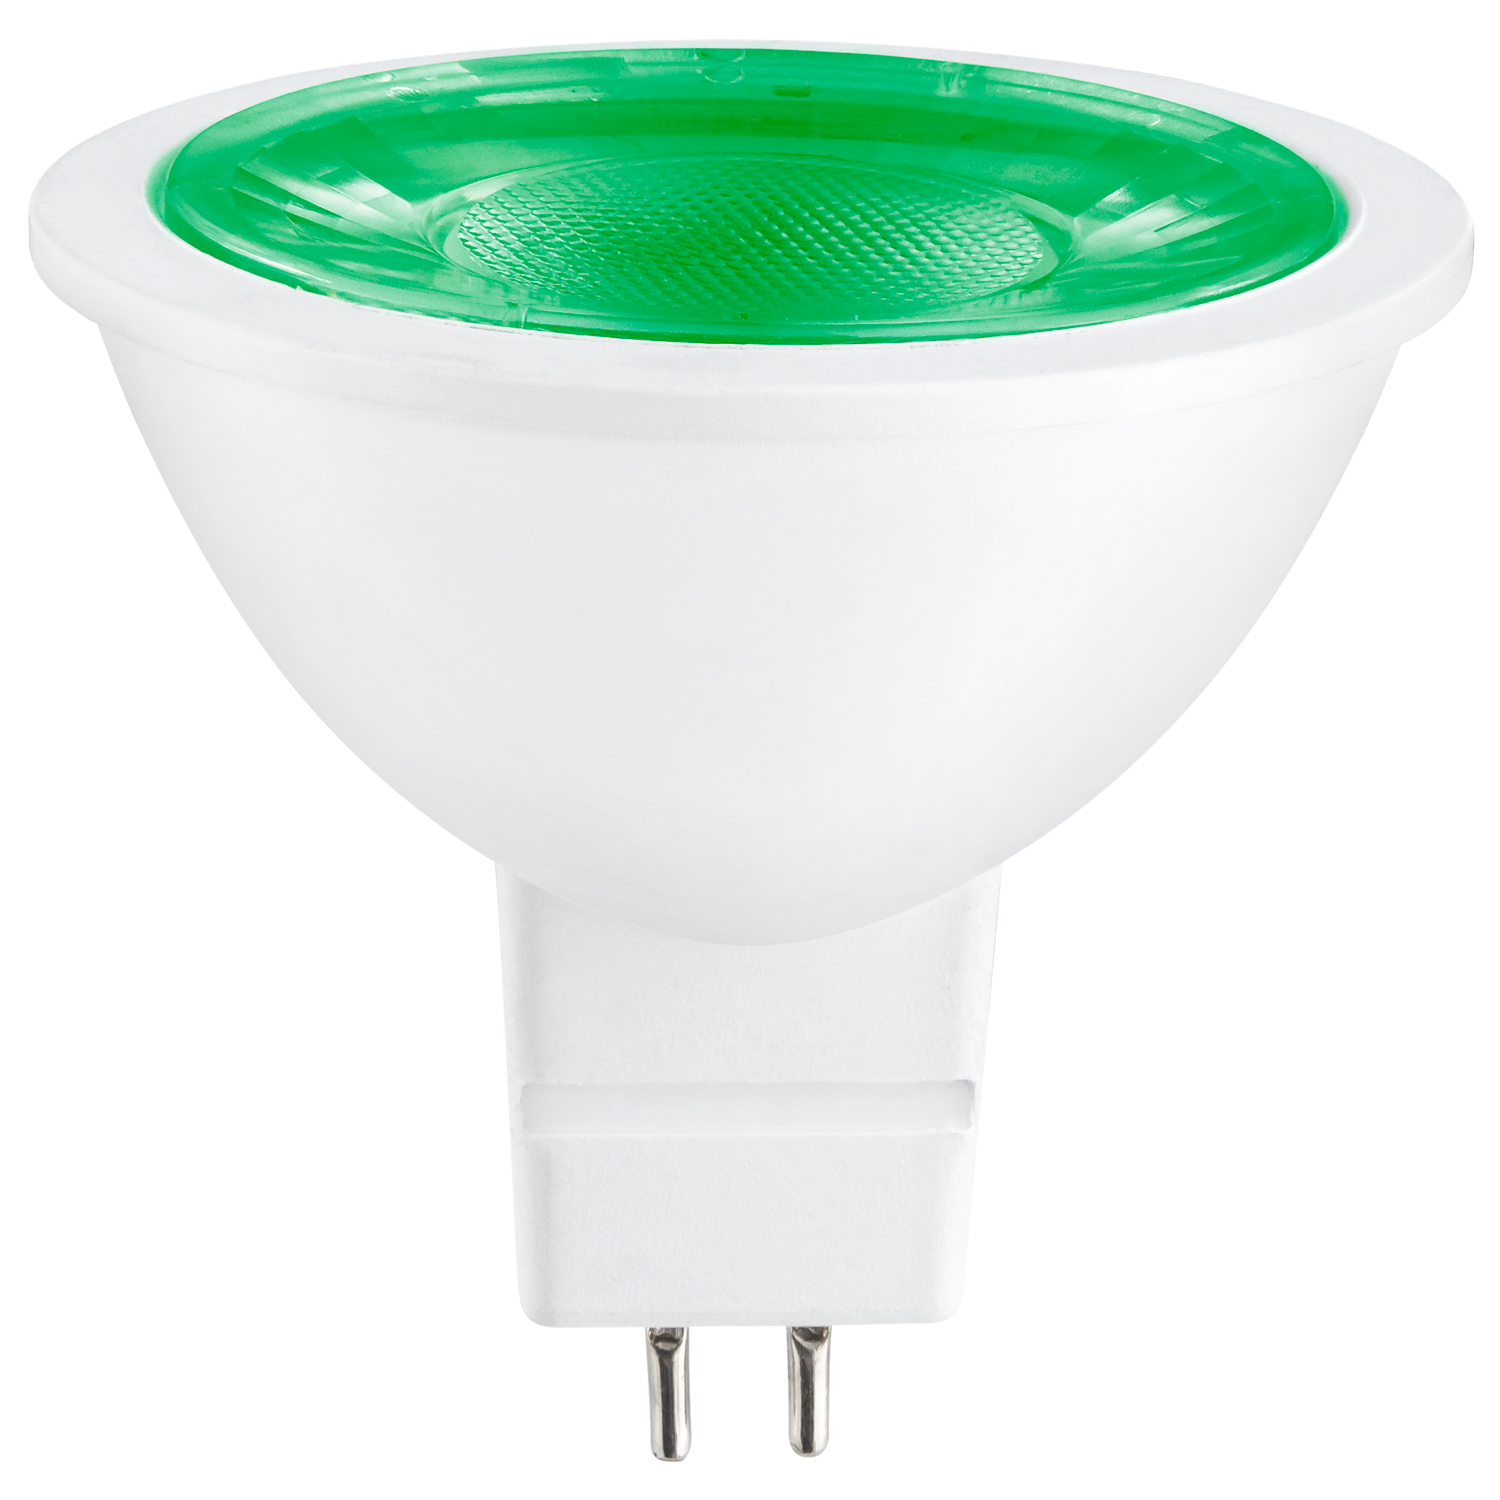 LED MR16 Light Bulb GU5.3 25-Watt Equivalent, Green